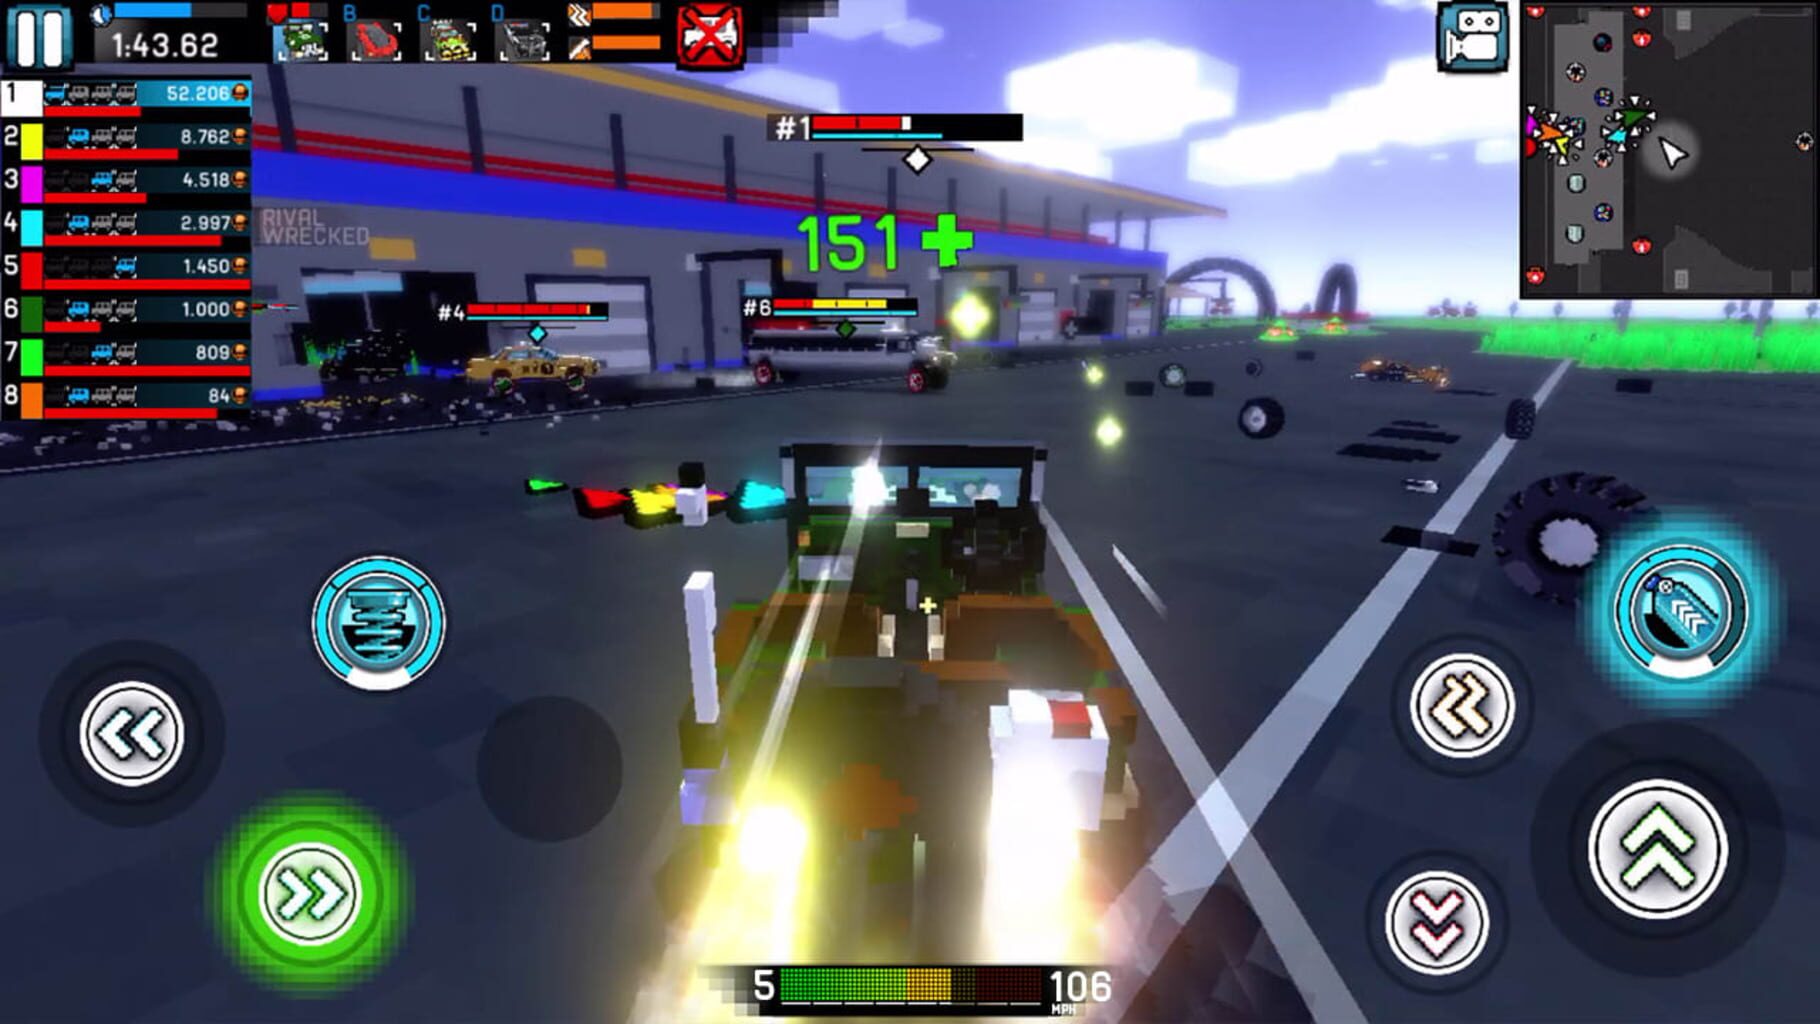 Carnage: Battle Arena screenshot